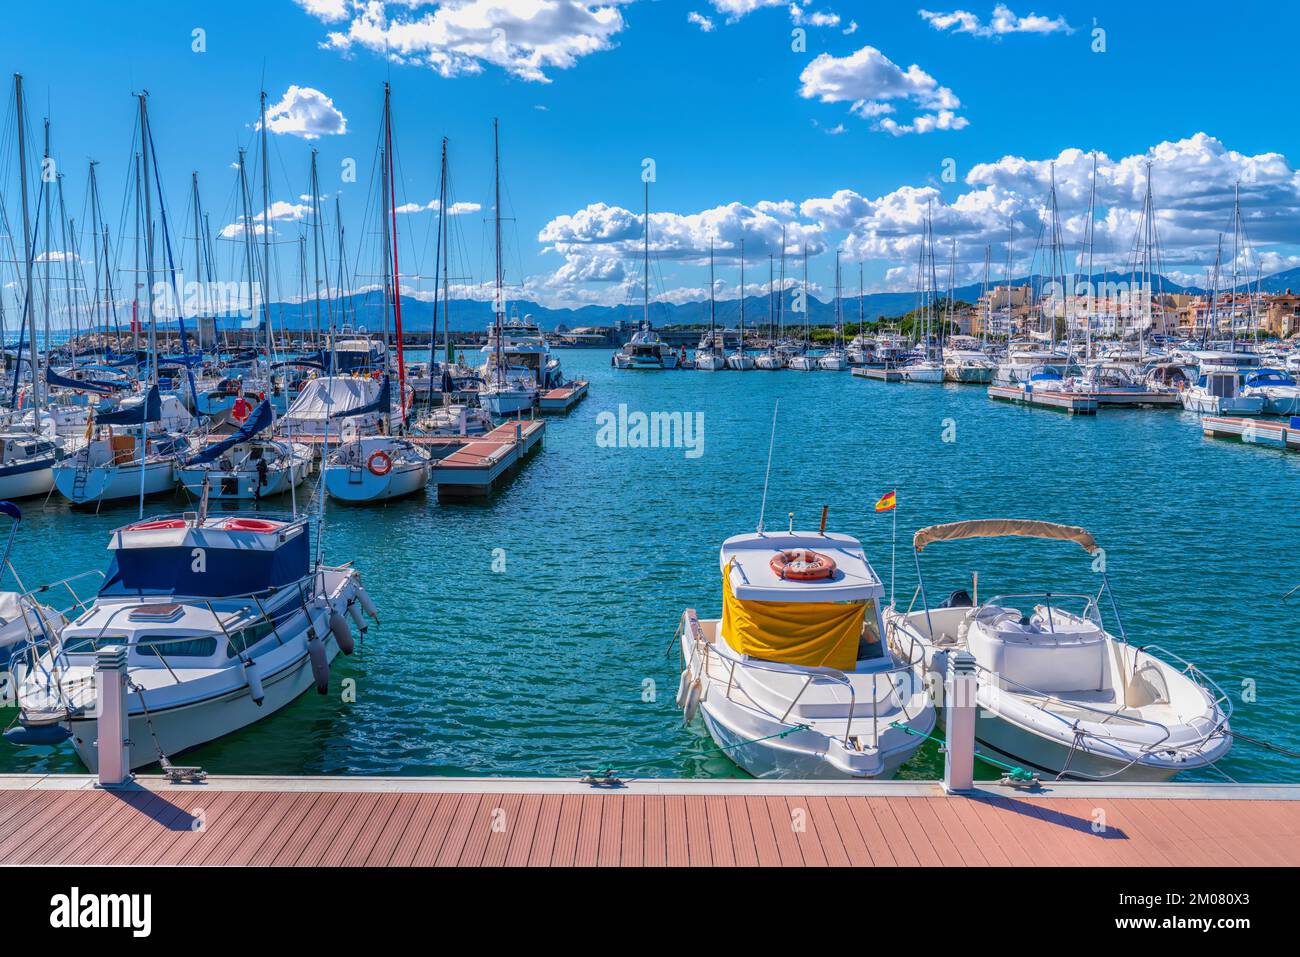 Cambrils marina Spain boats and yachts in Tarragona Province Catalonia with blue sea and sky Stock Photo